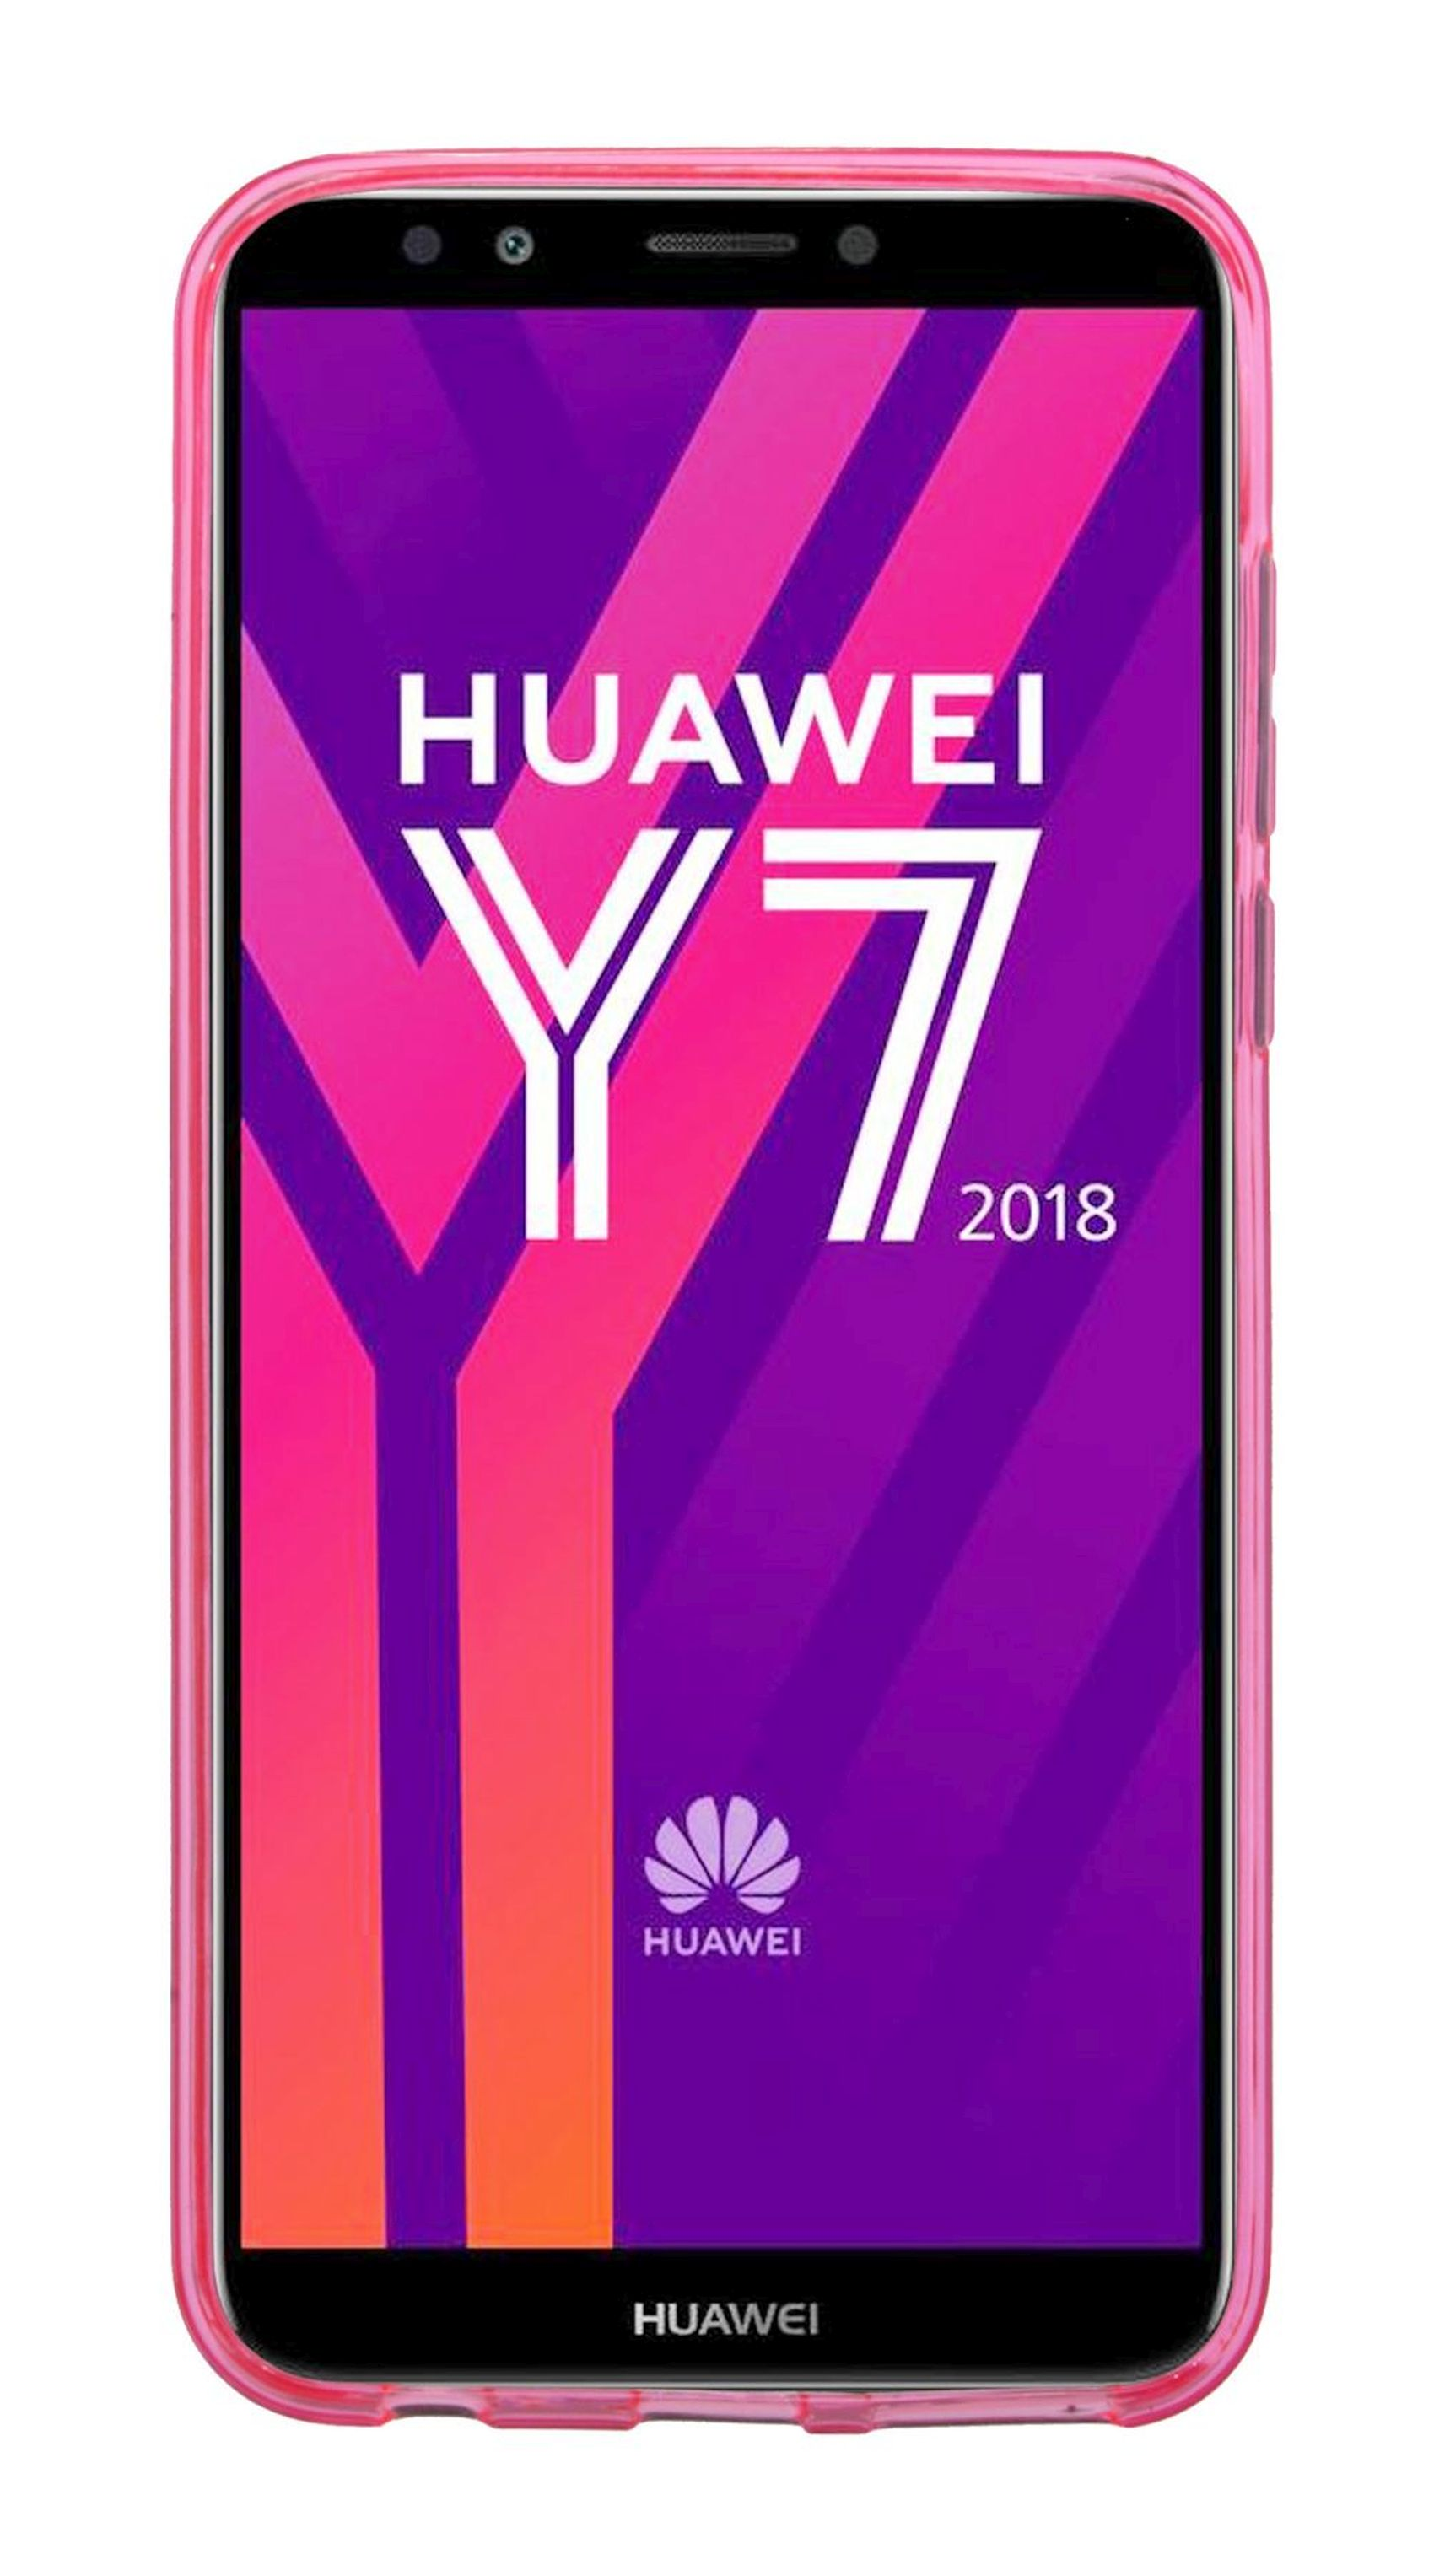 Bumper, Y7 2018, Huawei, Prime S-Line Rosa COFI Cover,